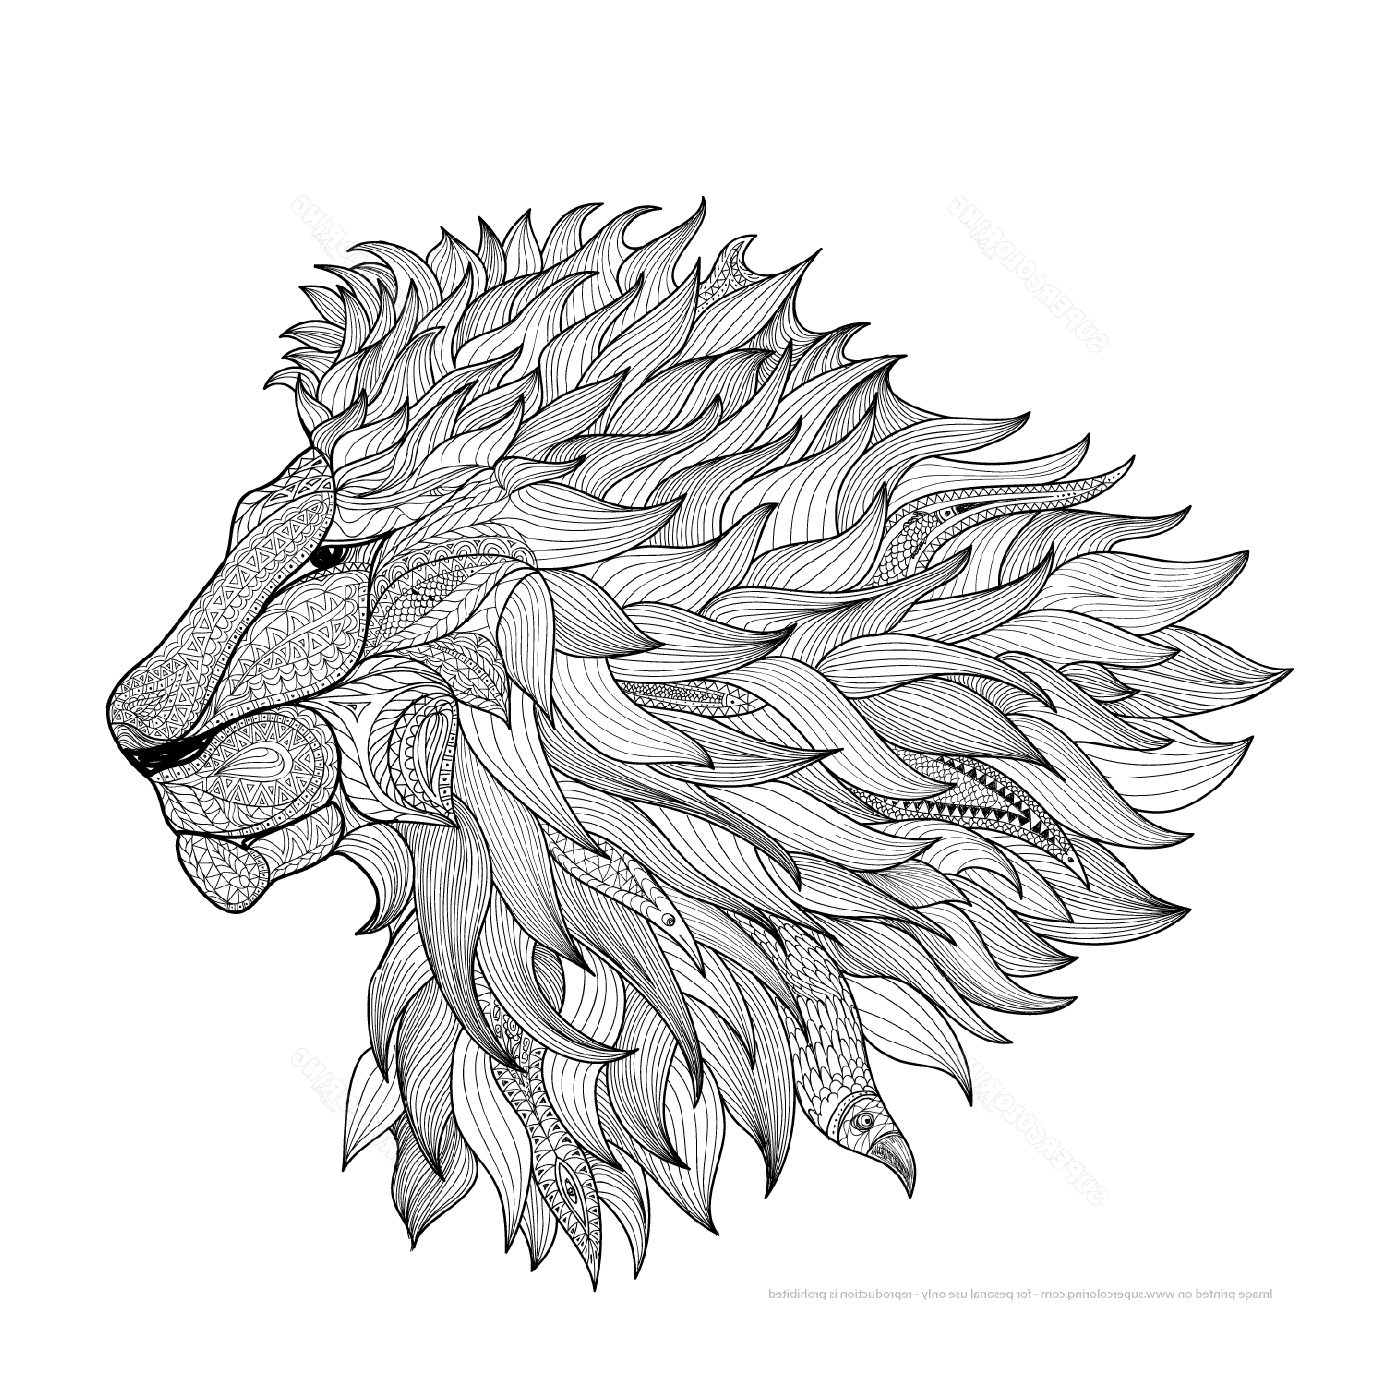  Big lion's head 